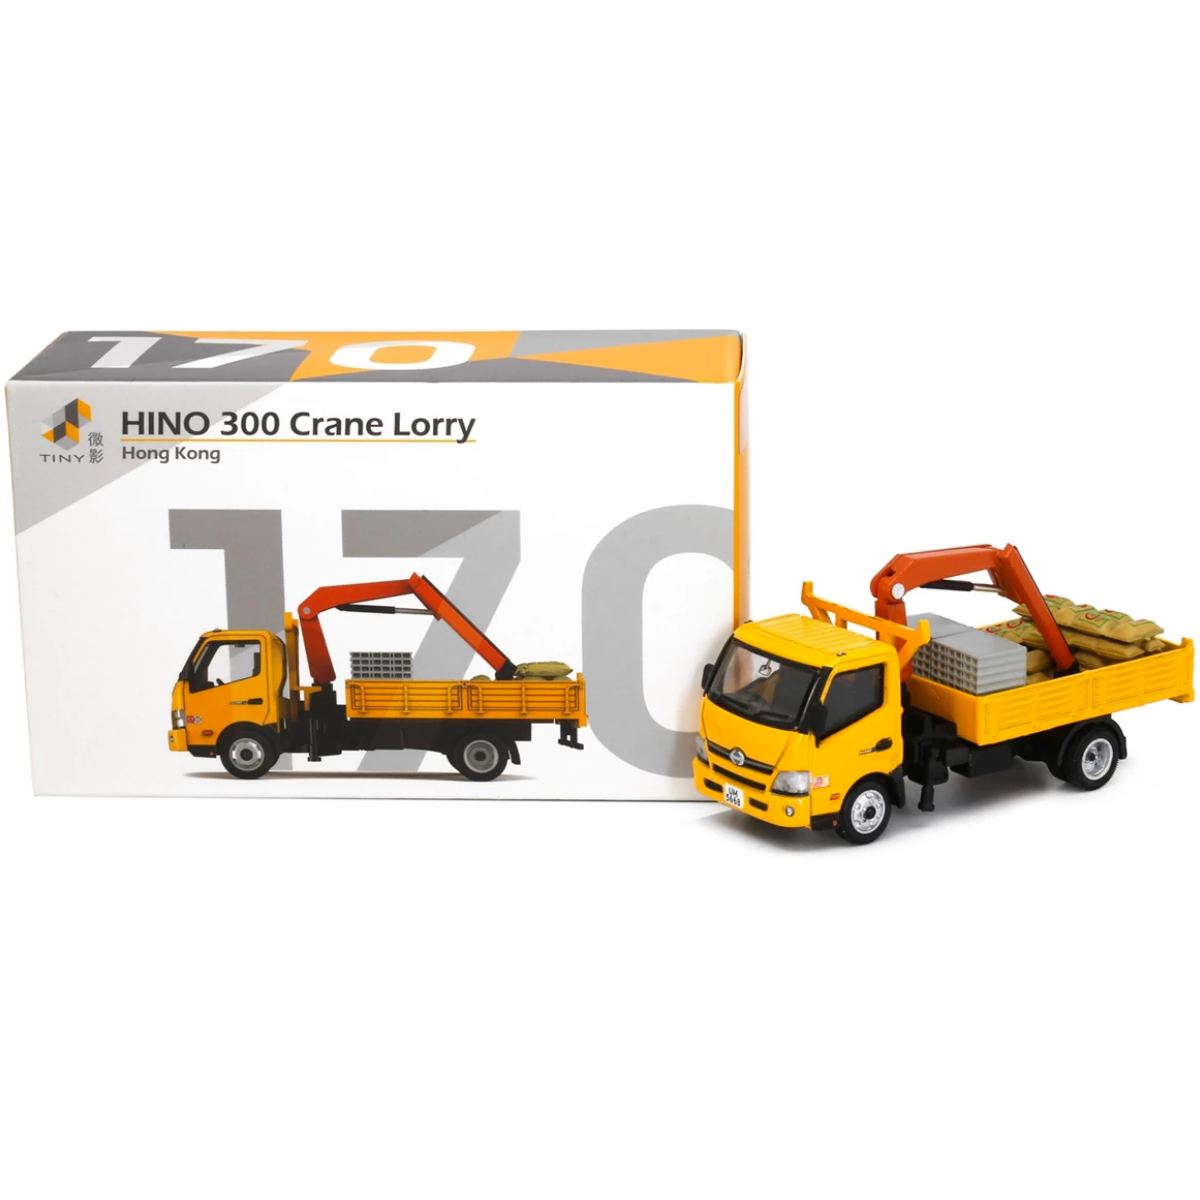 Tiny Models Hino 300 Crane Lorry (1:76 Scale)